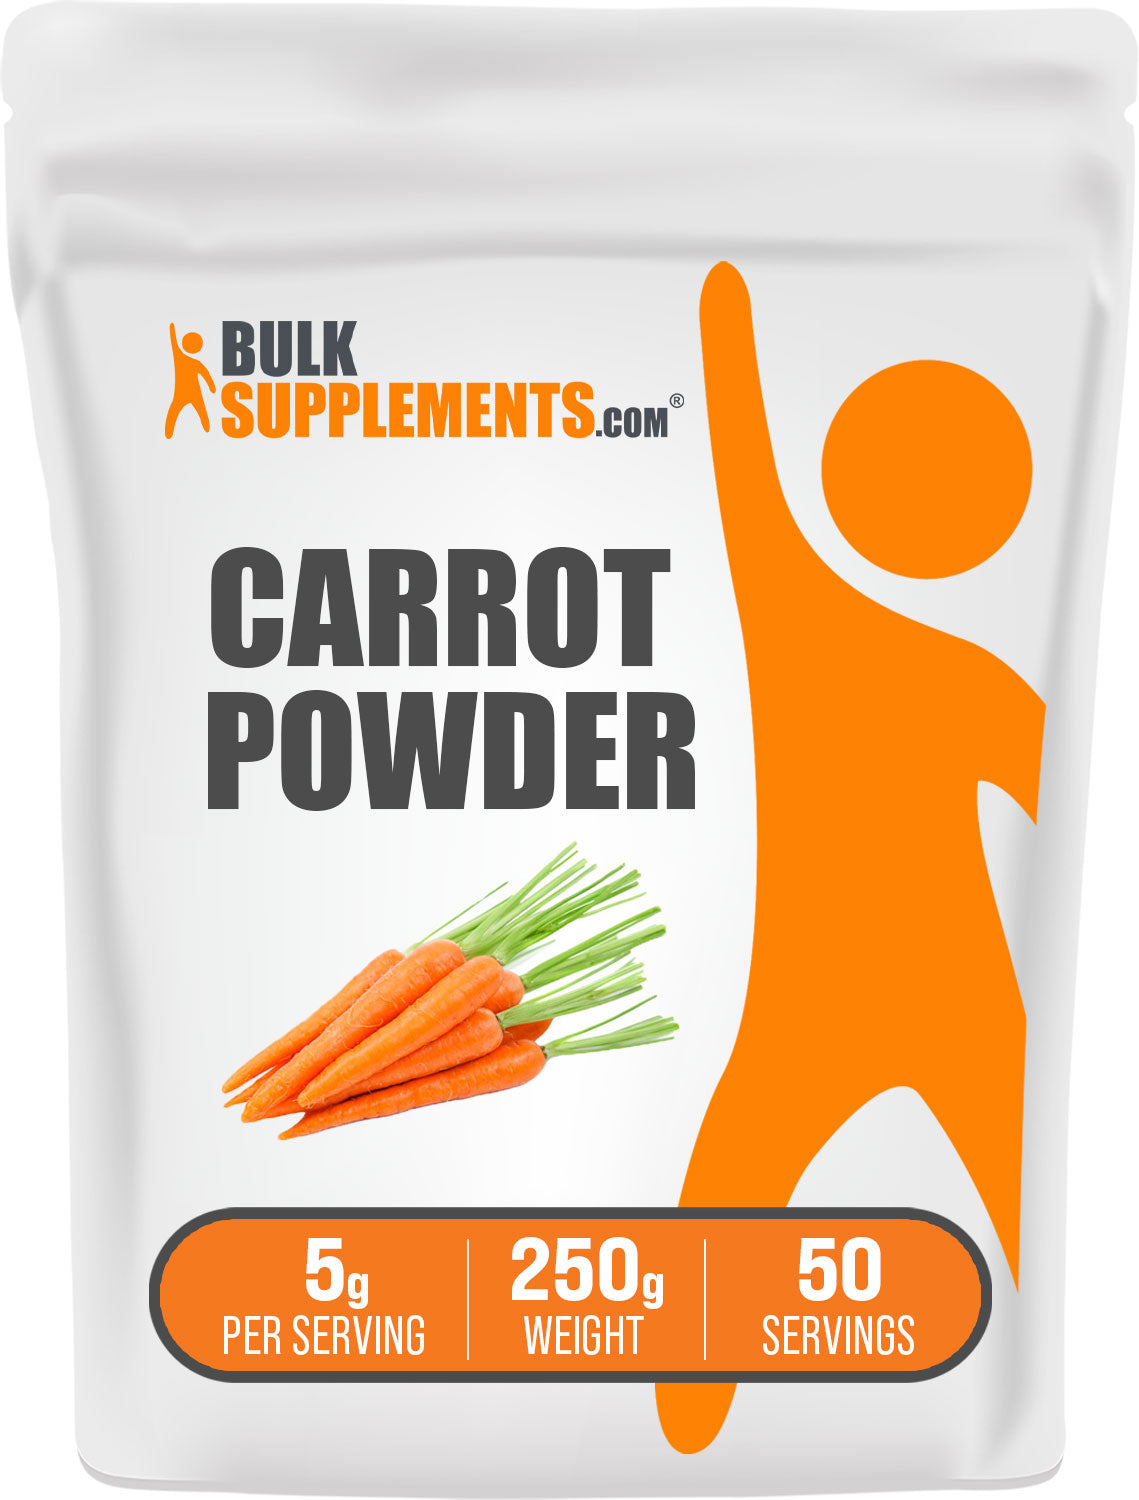 250g of Carrot Powder